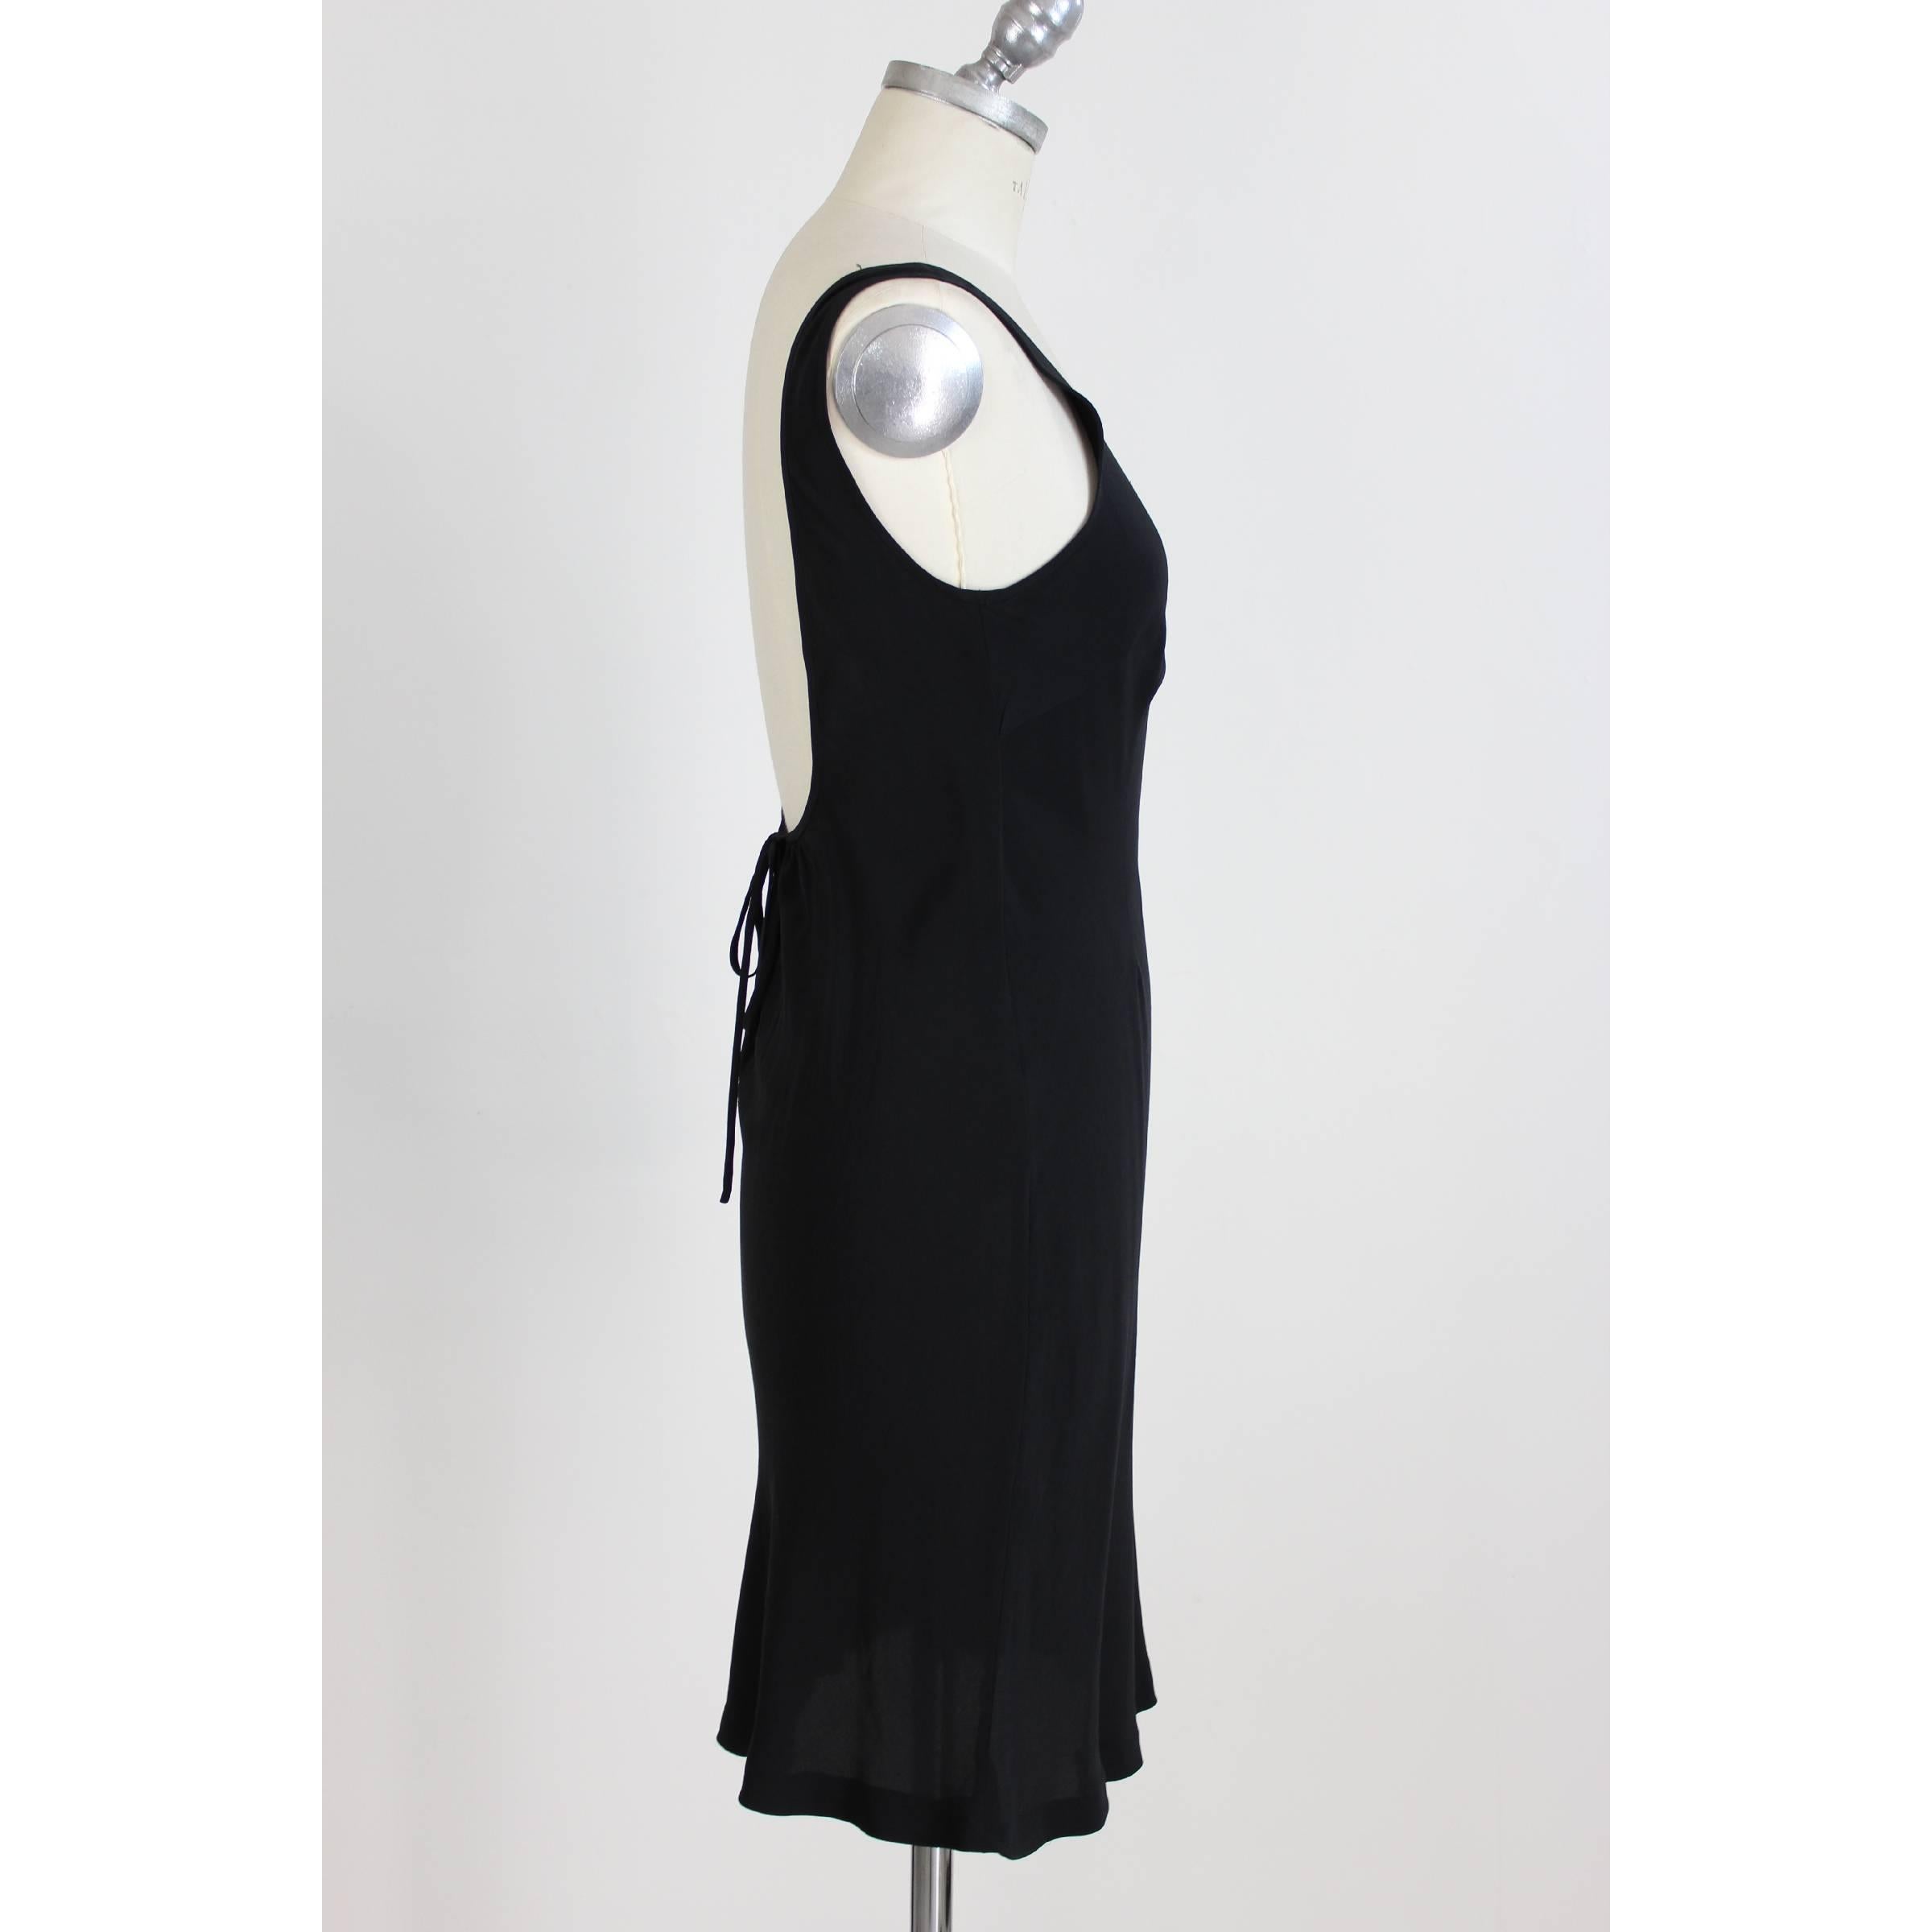 Alberto Aspesi Party Black Silk Sheath Dress  In Excellent Condition For Sale In Brindisi, IT